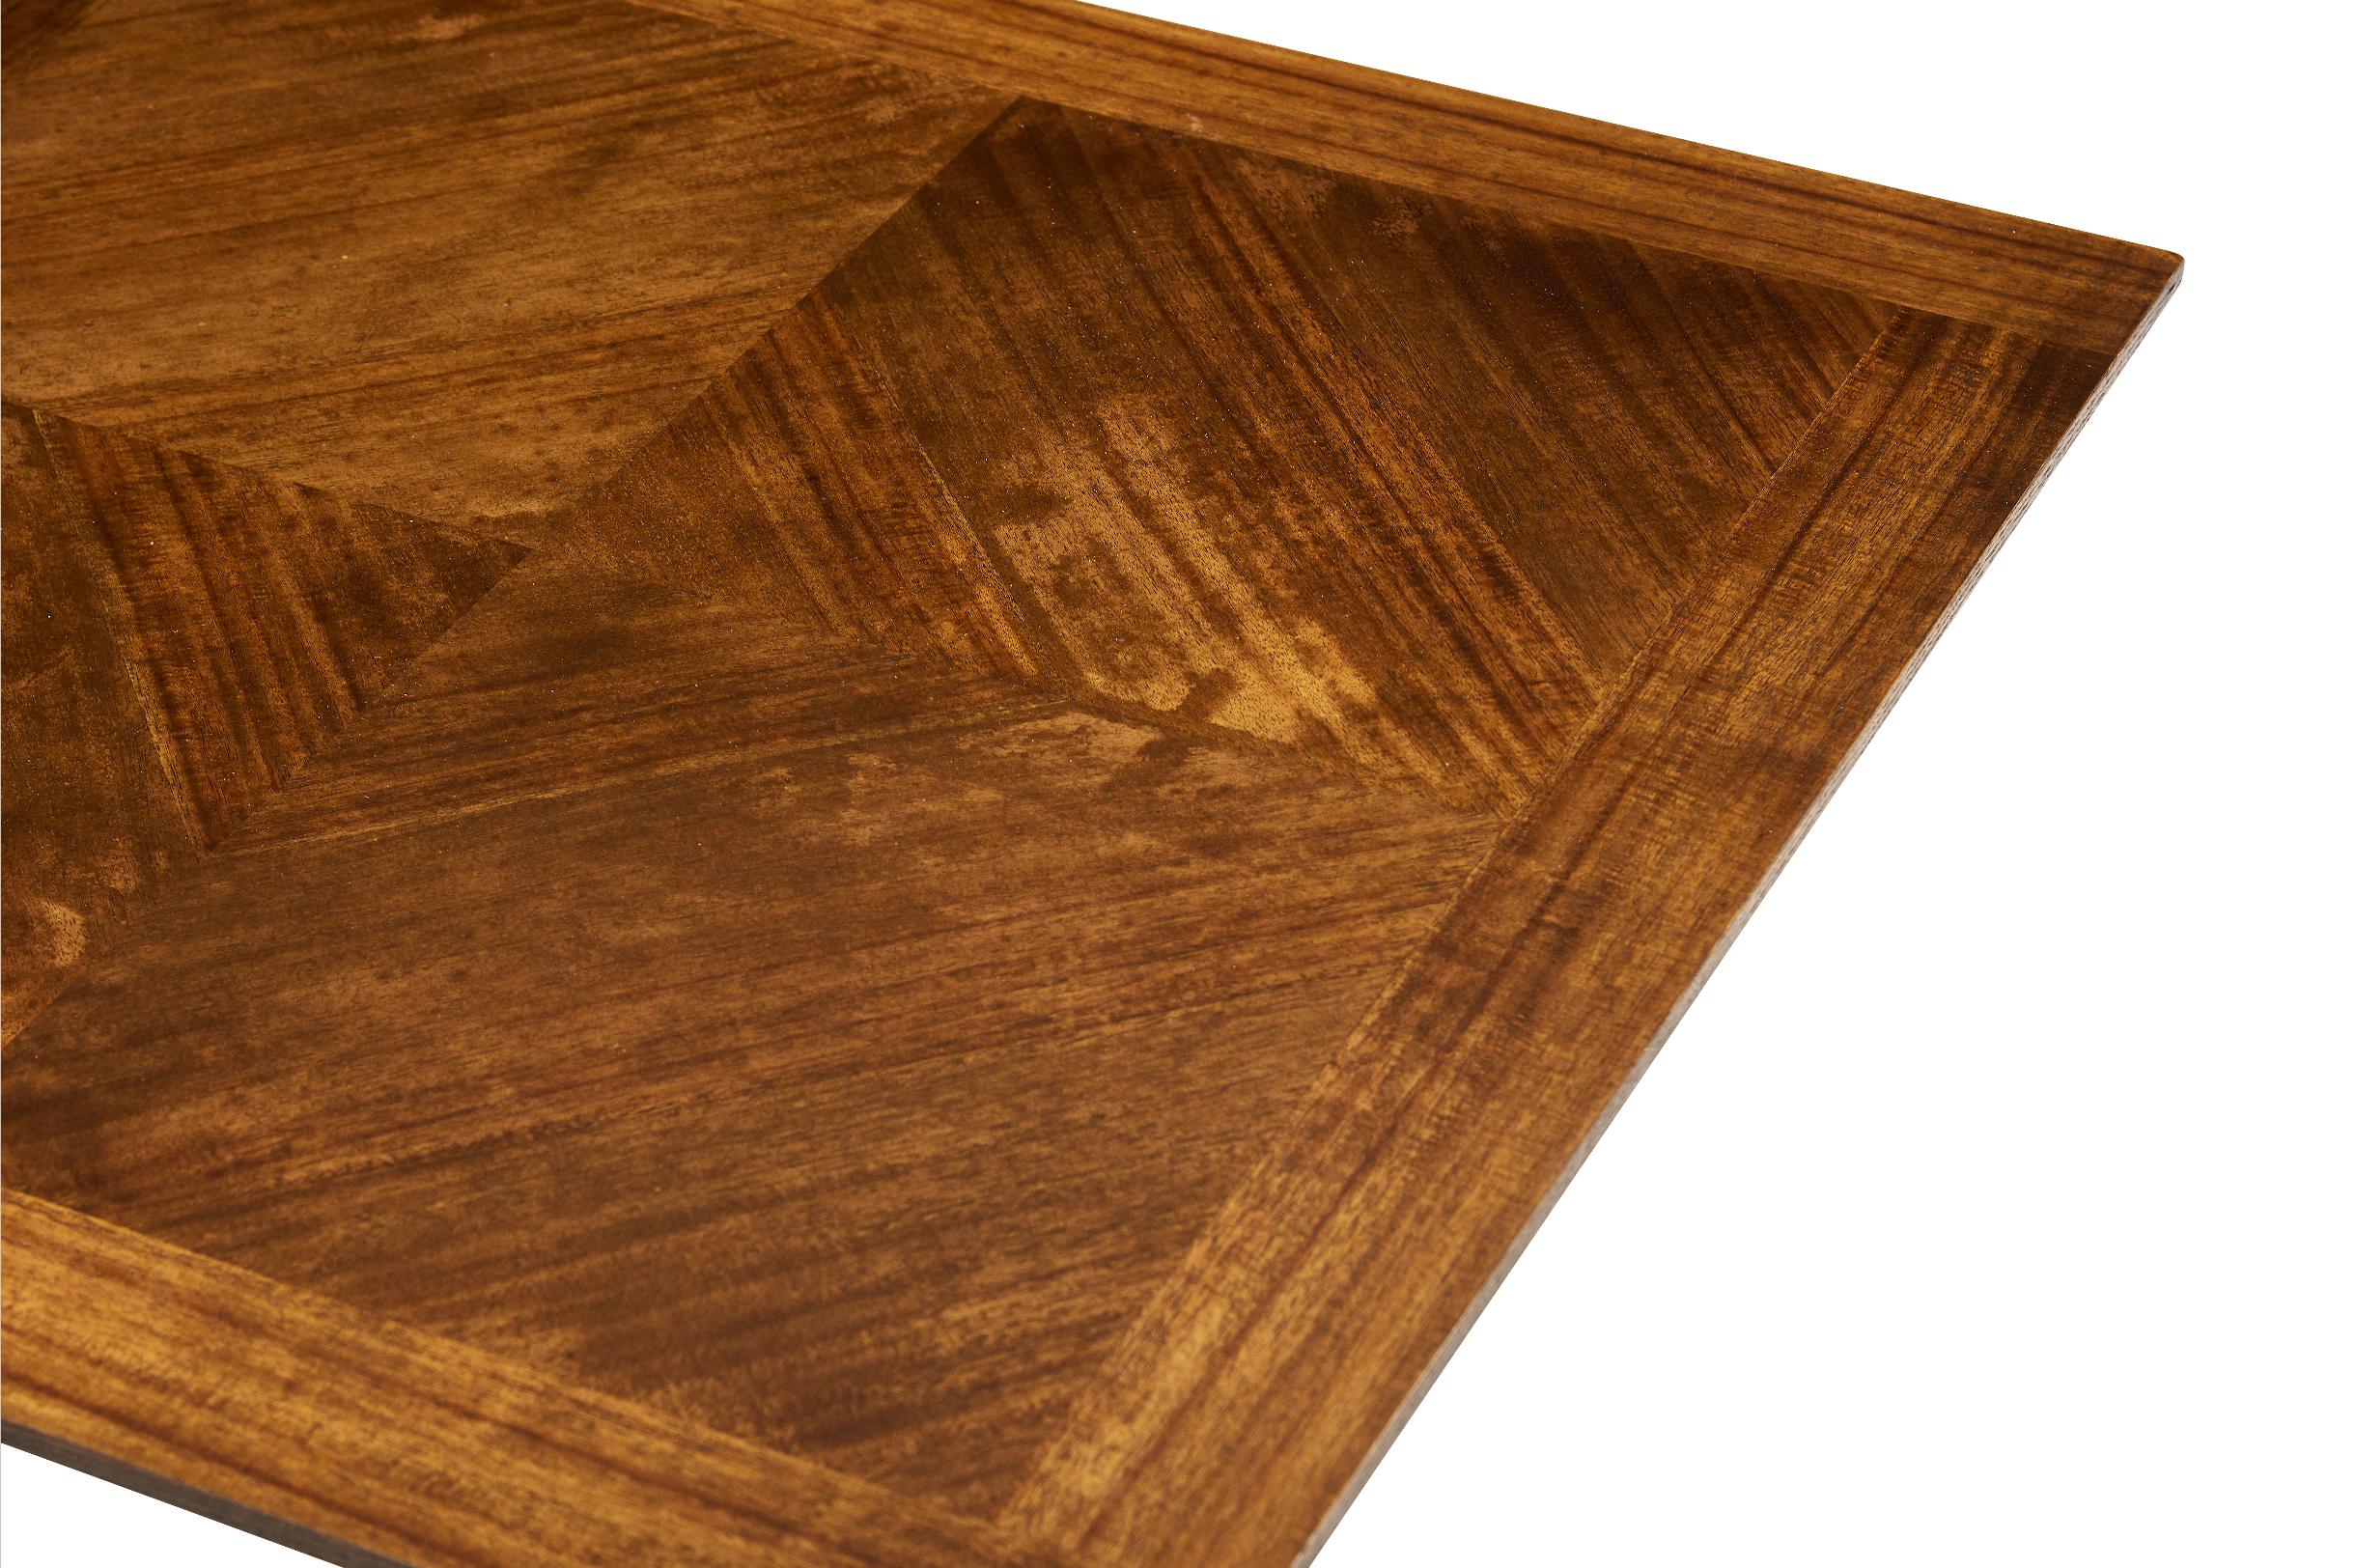 The differences between wood grain paper and veneer